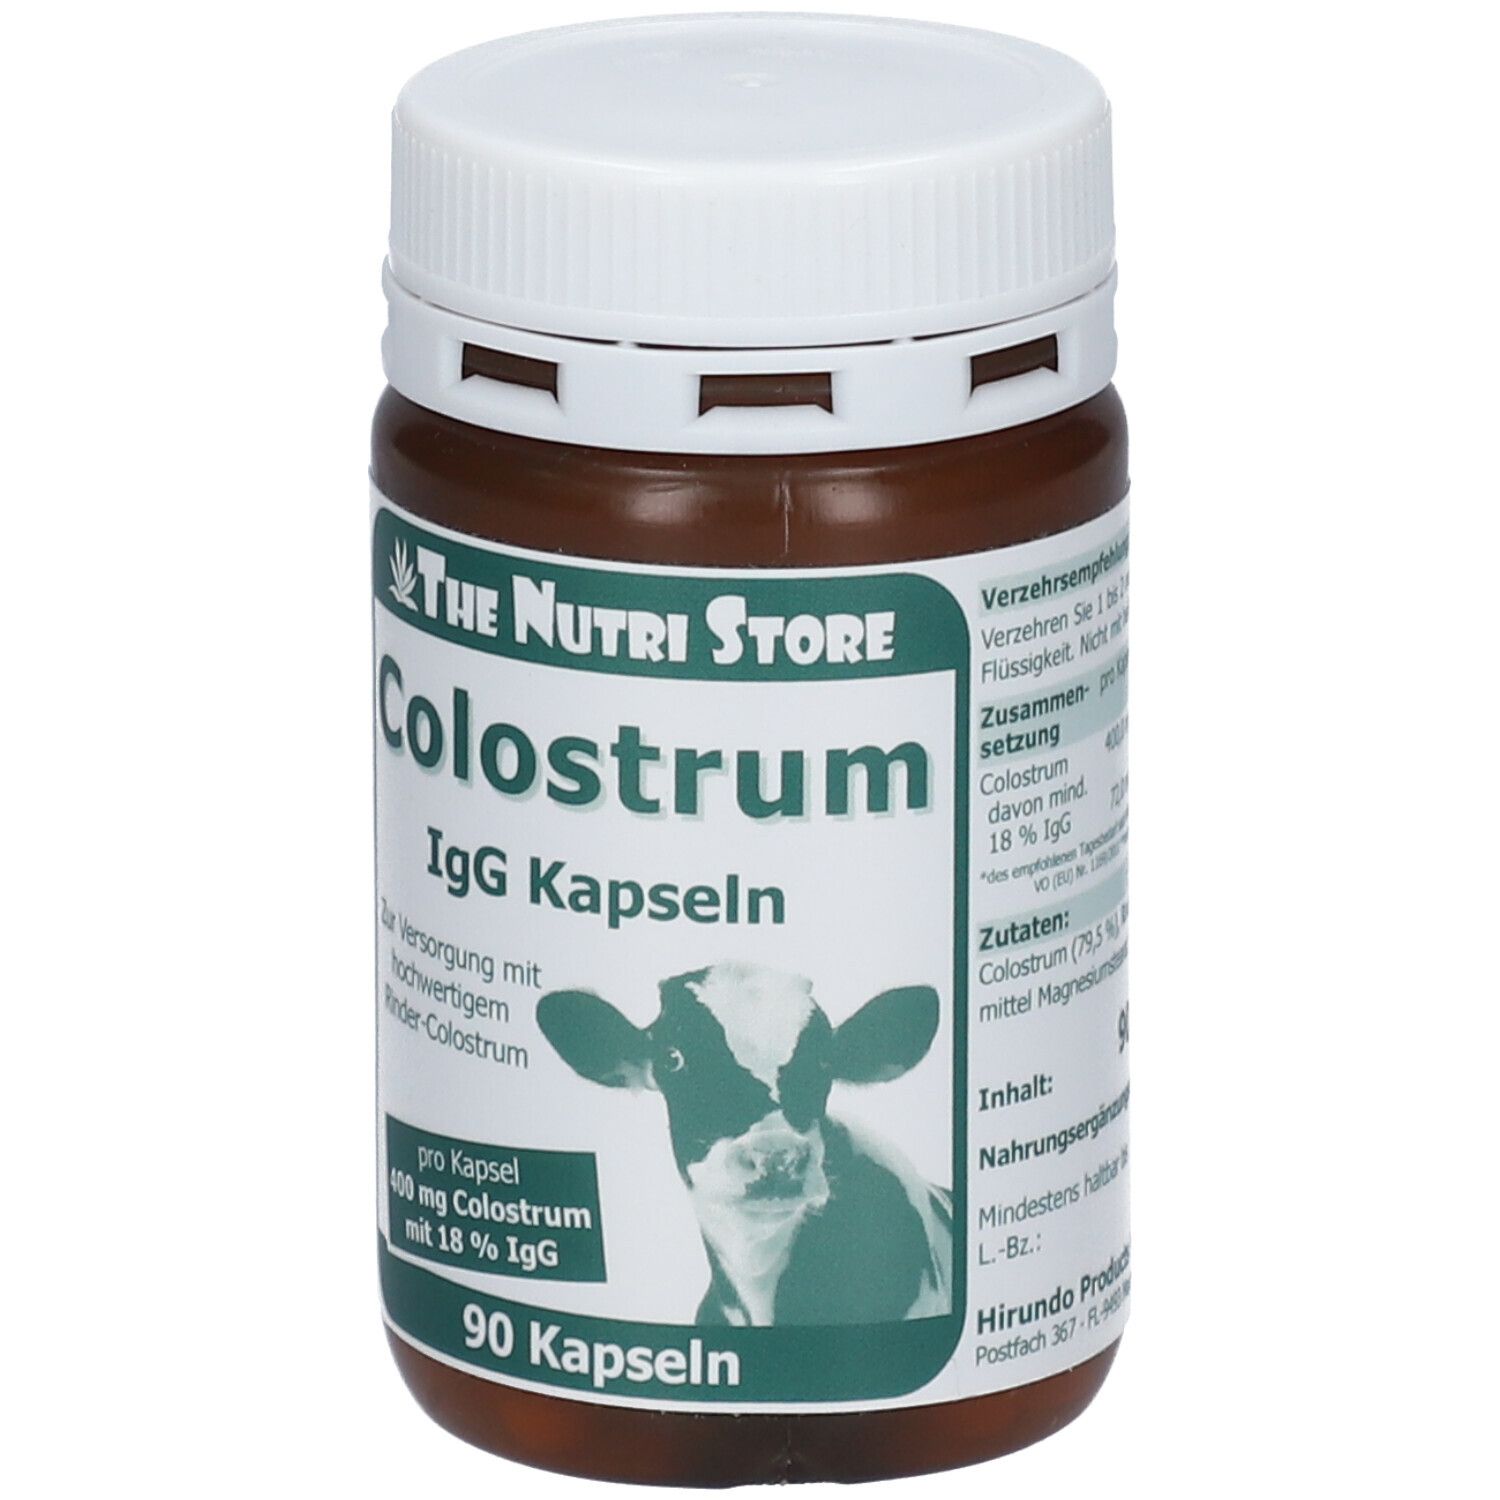 Colostrum 400 mg